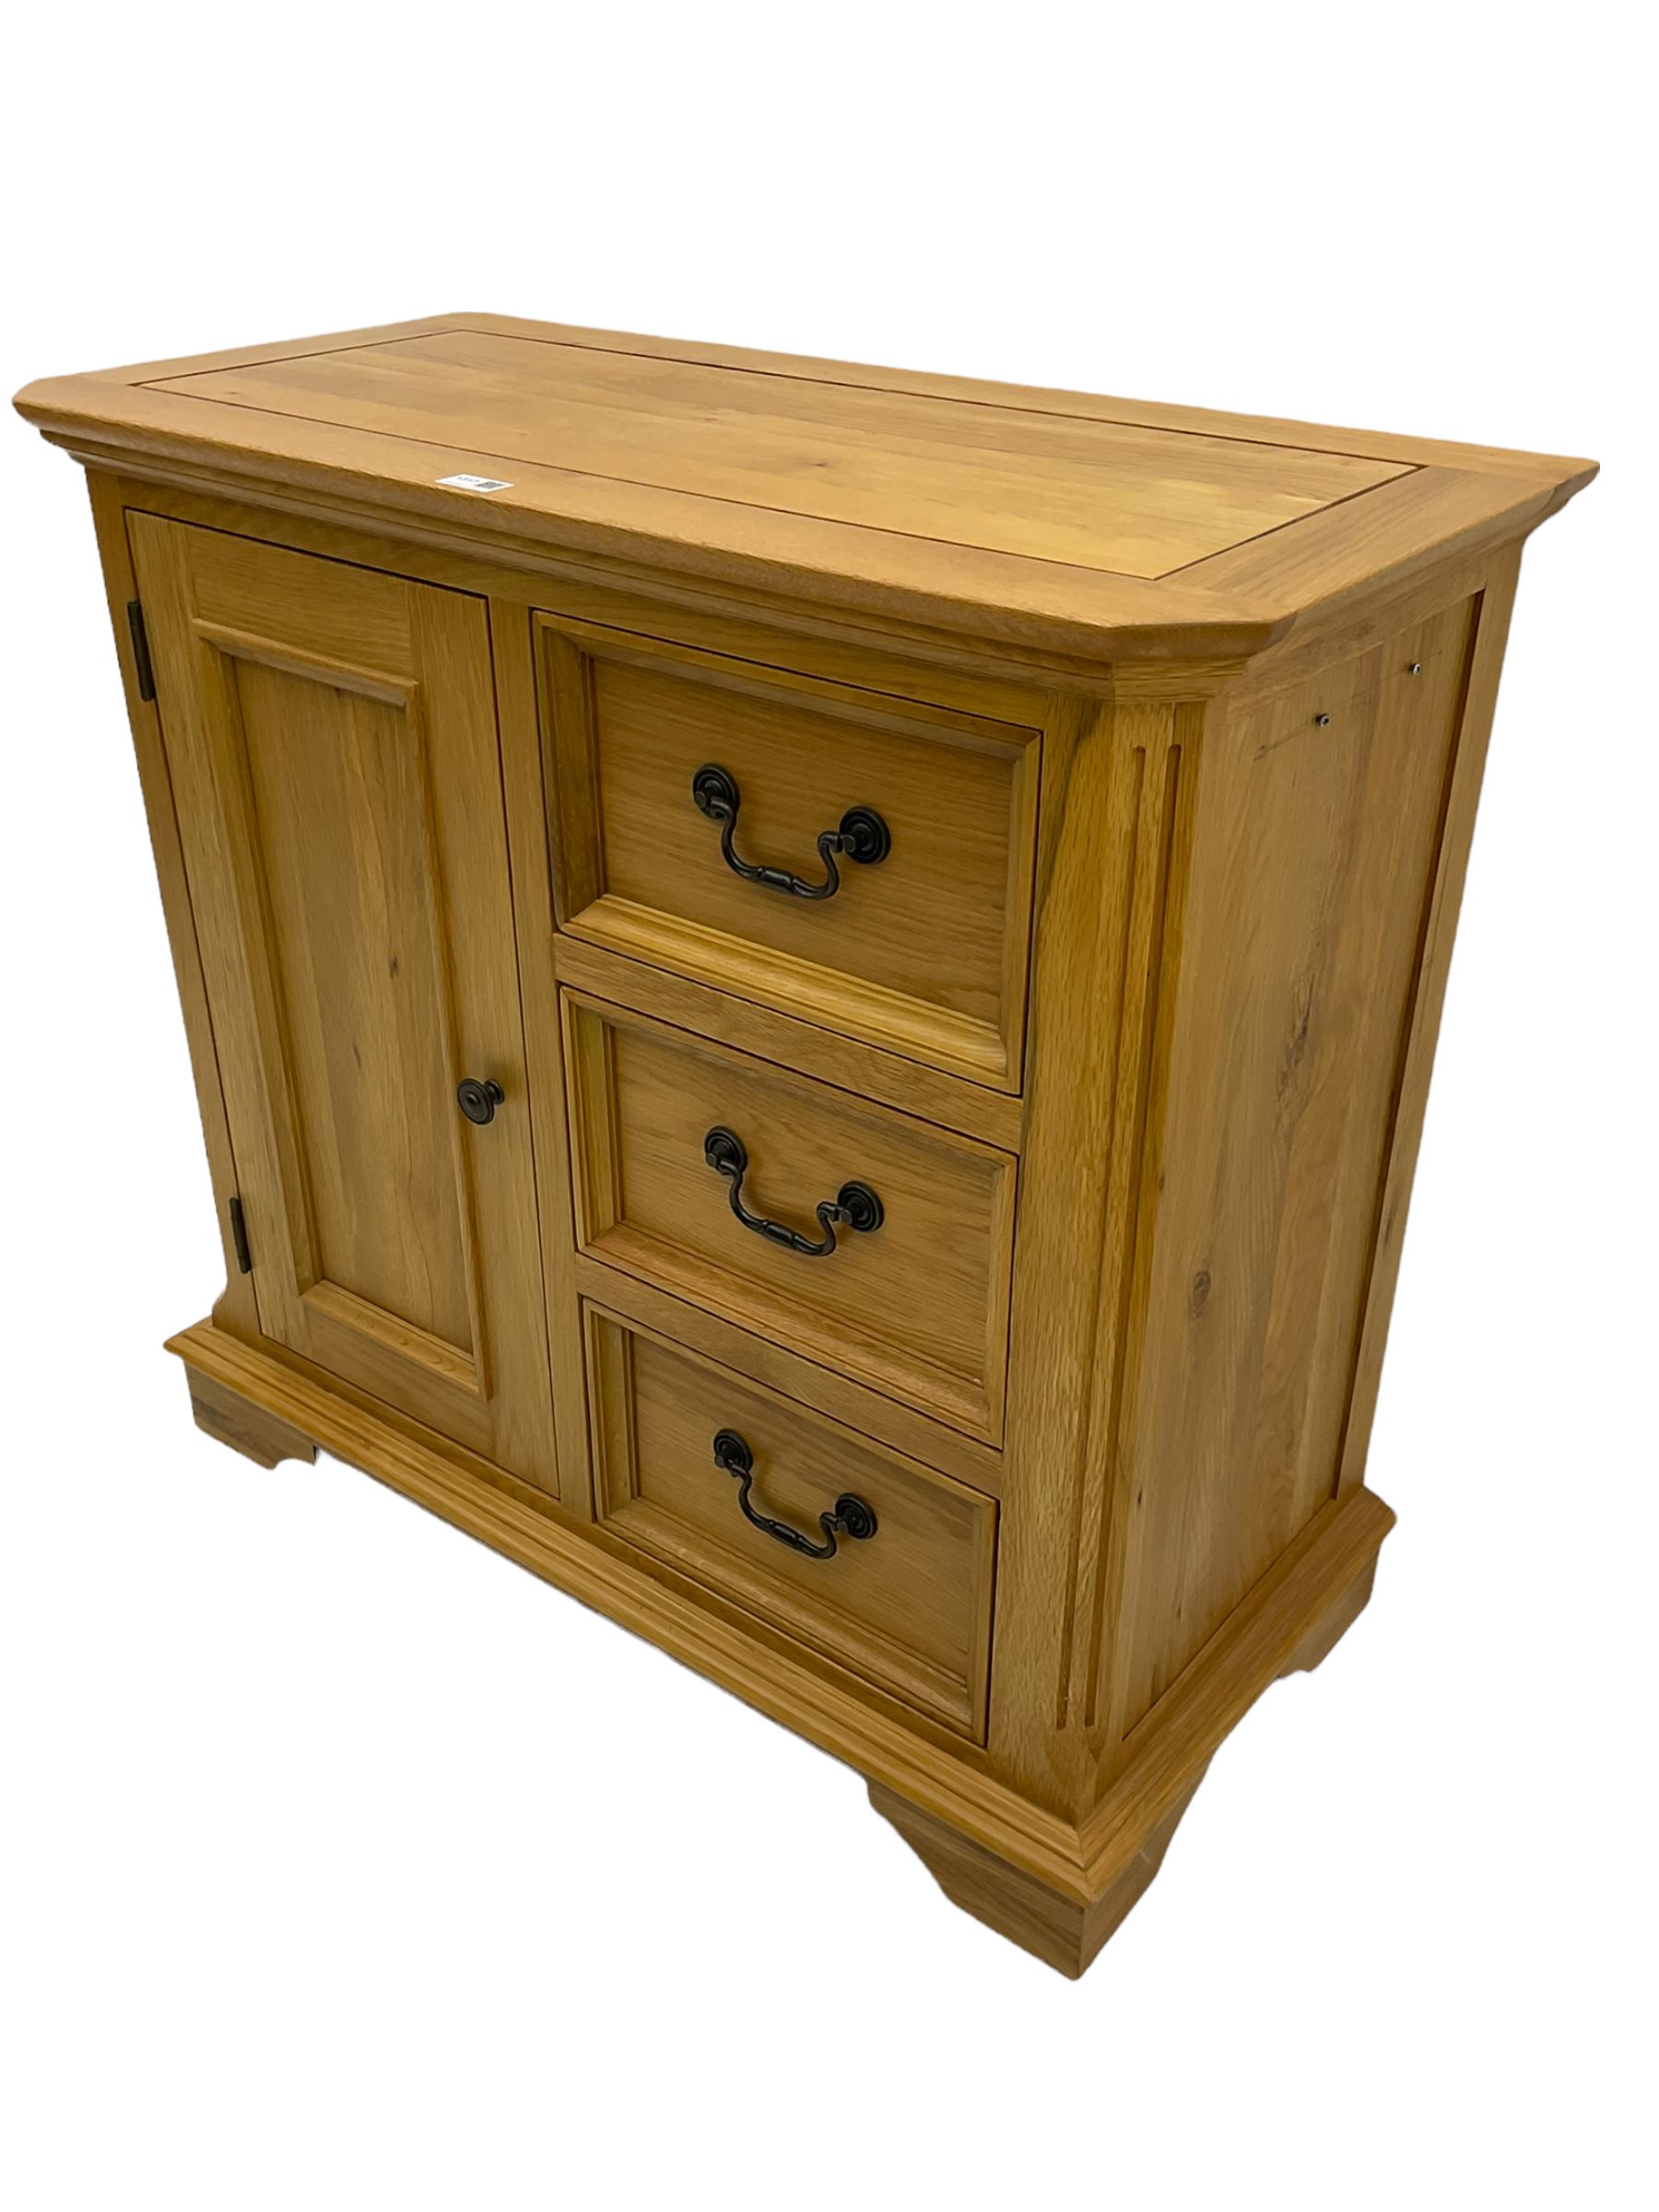 Light oak side cabinet - Image 5 of 5